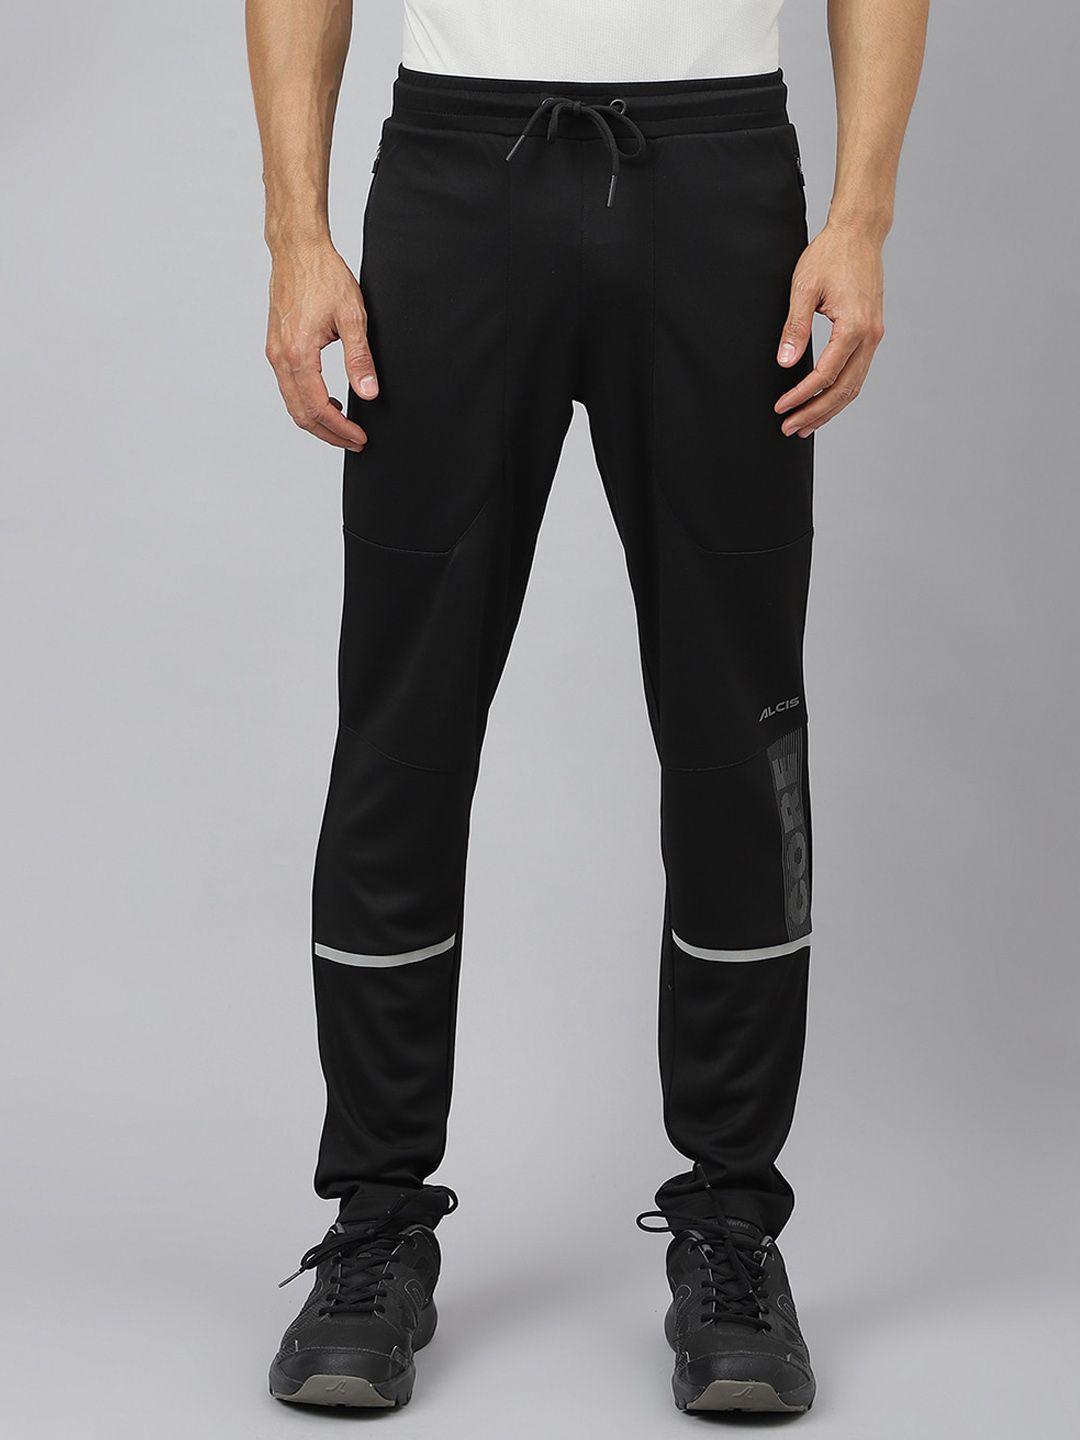 alcis-men-anti-static-slim-fit-core-sports-training-track-pants